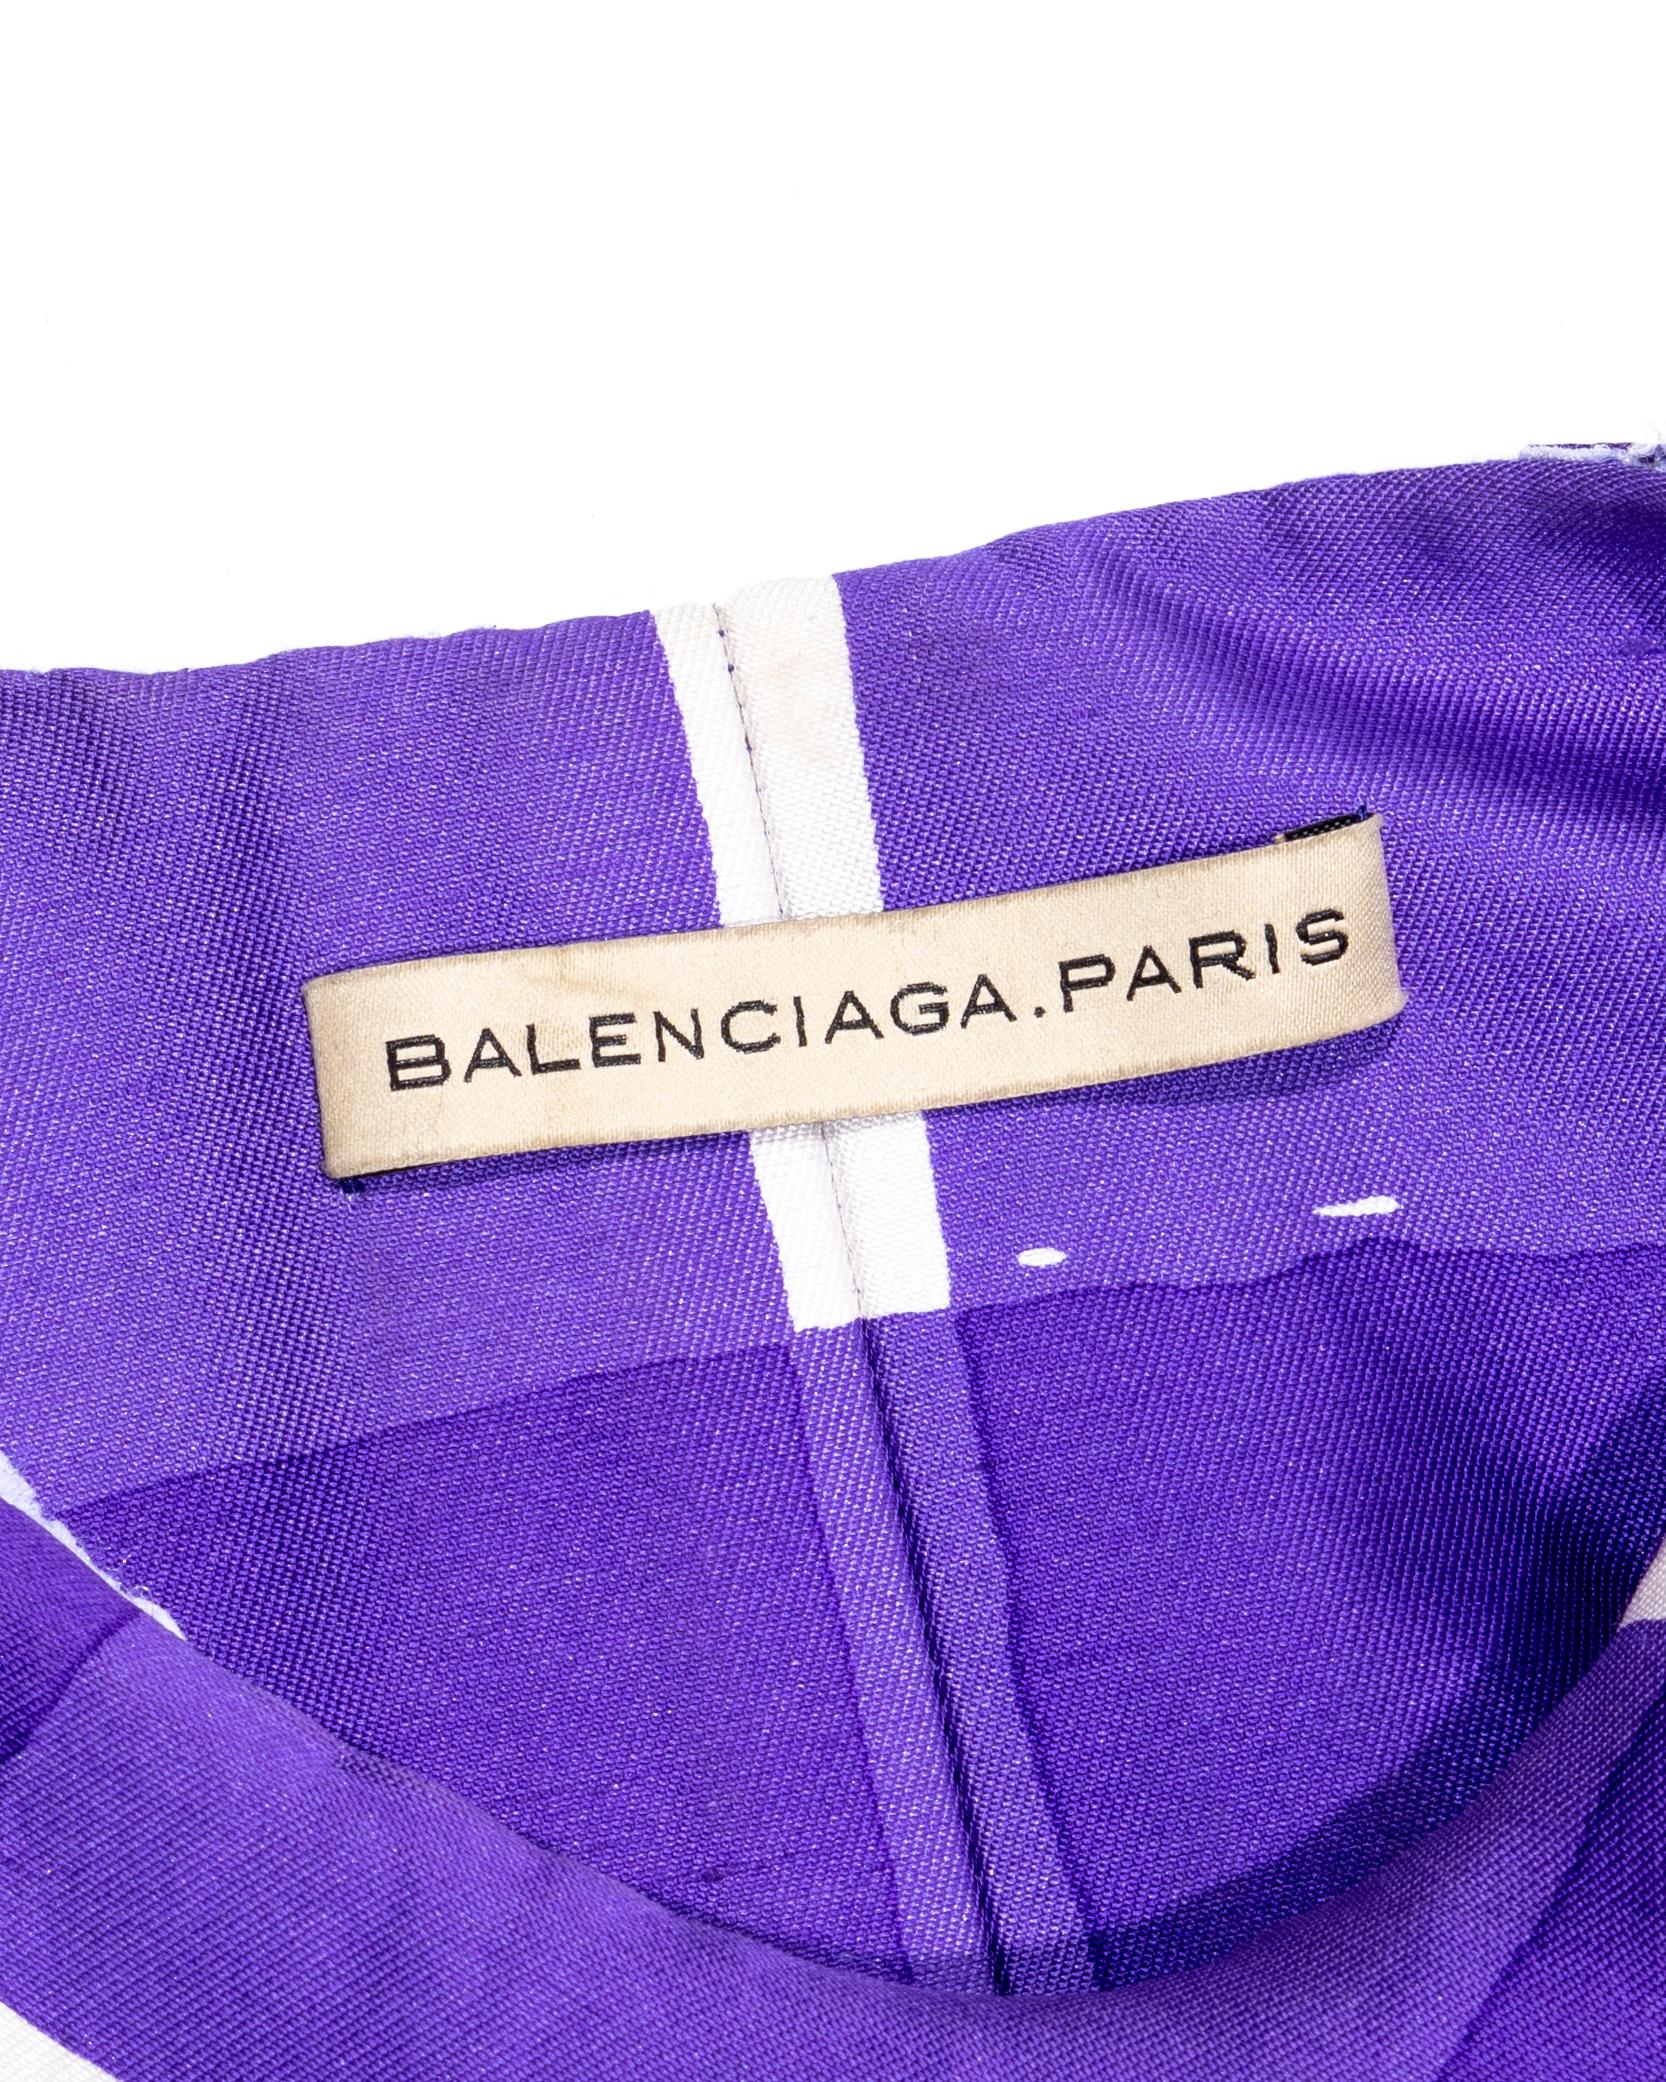 Balenciaga by Nicolas Ghesquière checked silk structured mini dress, ss 2008 For Sale 7